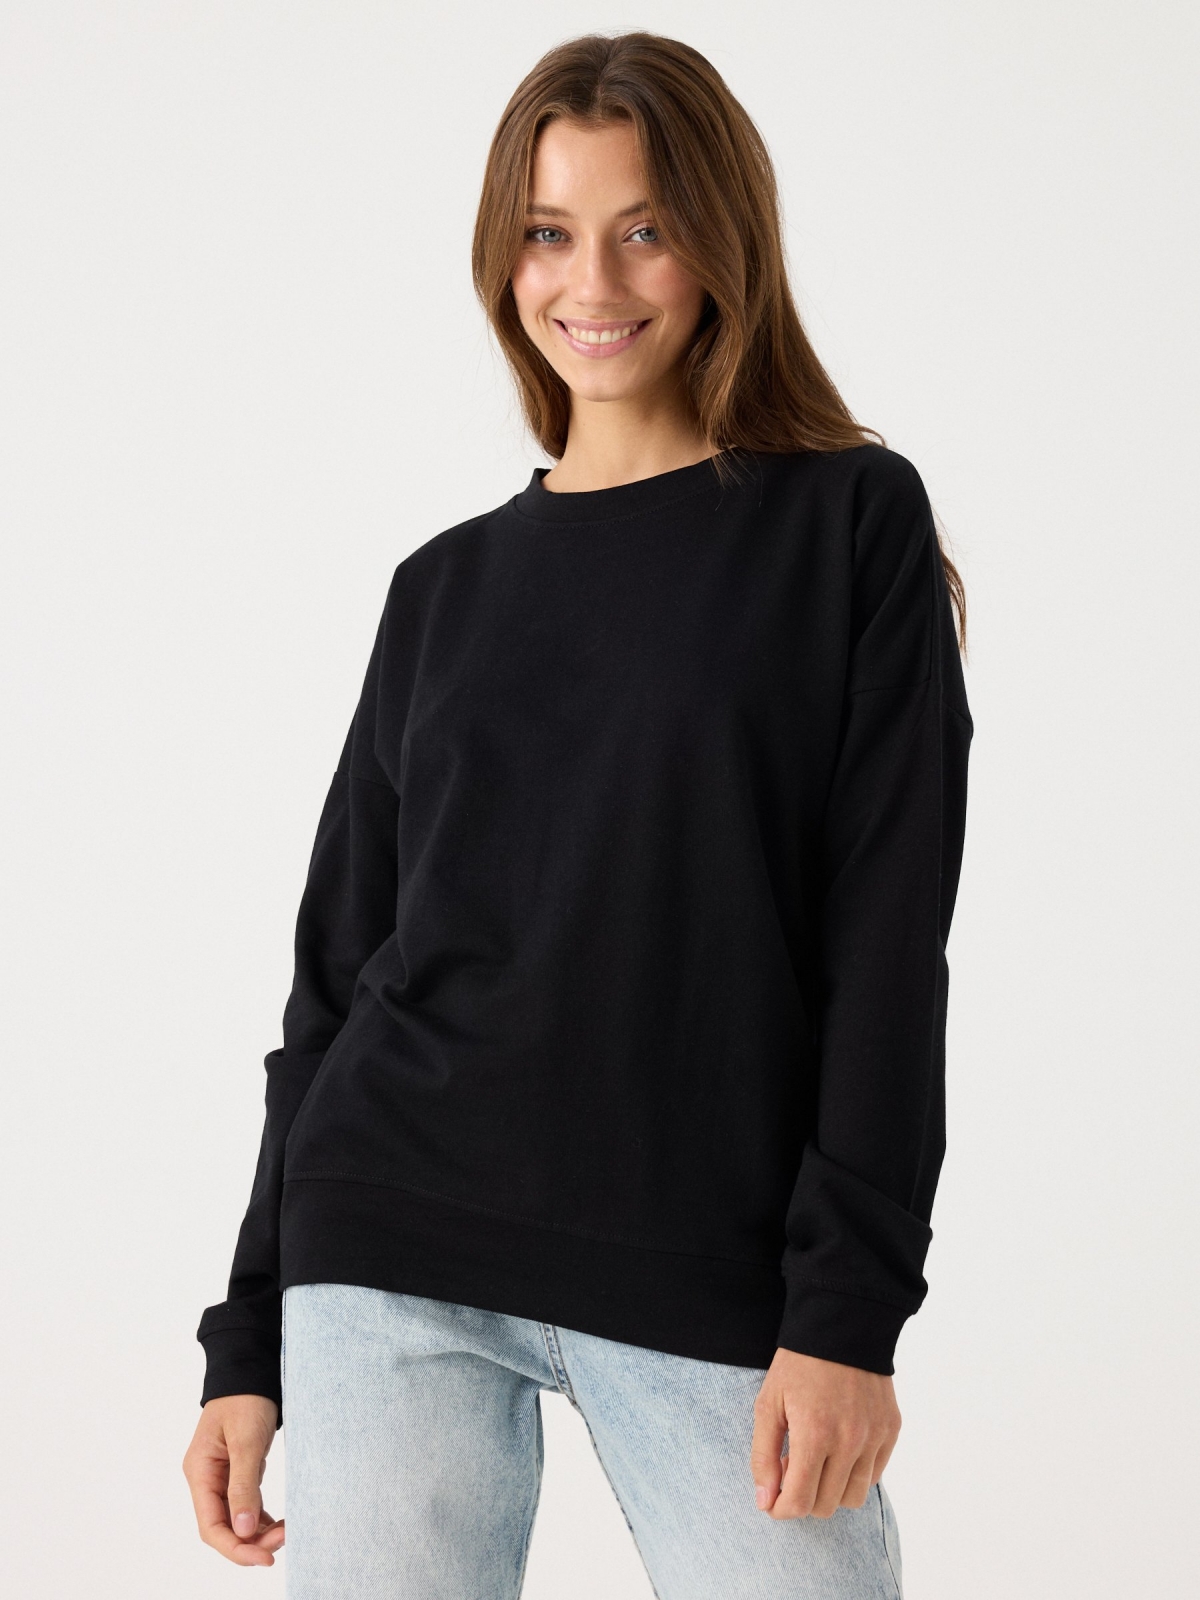 Basic sweatshirt black middle front view